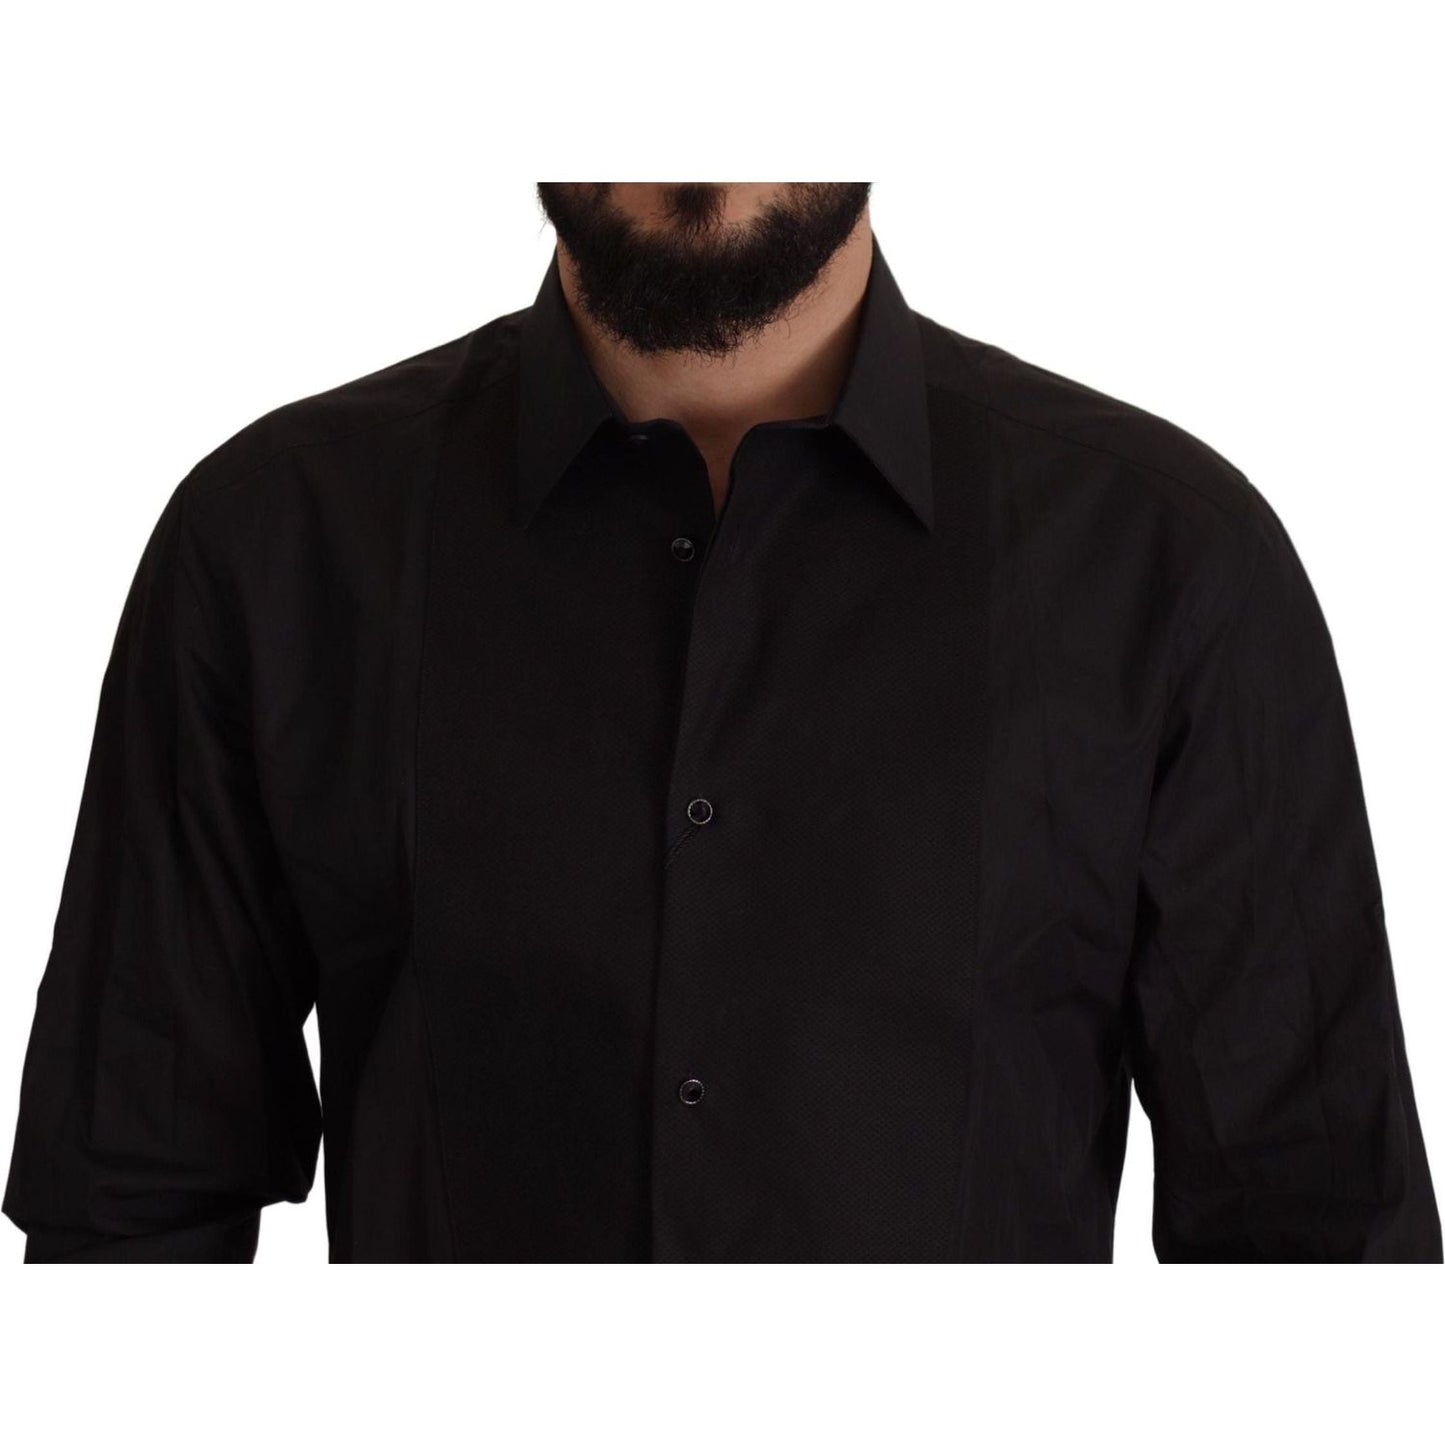 Dolce & Gabbana Sleek Black Tuxedo Dress Shirt - Slim Fit black-gold-slim-fit-tuxedo-dress-shirt